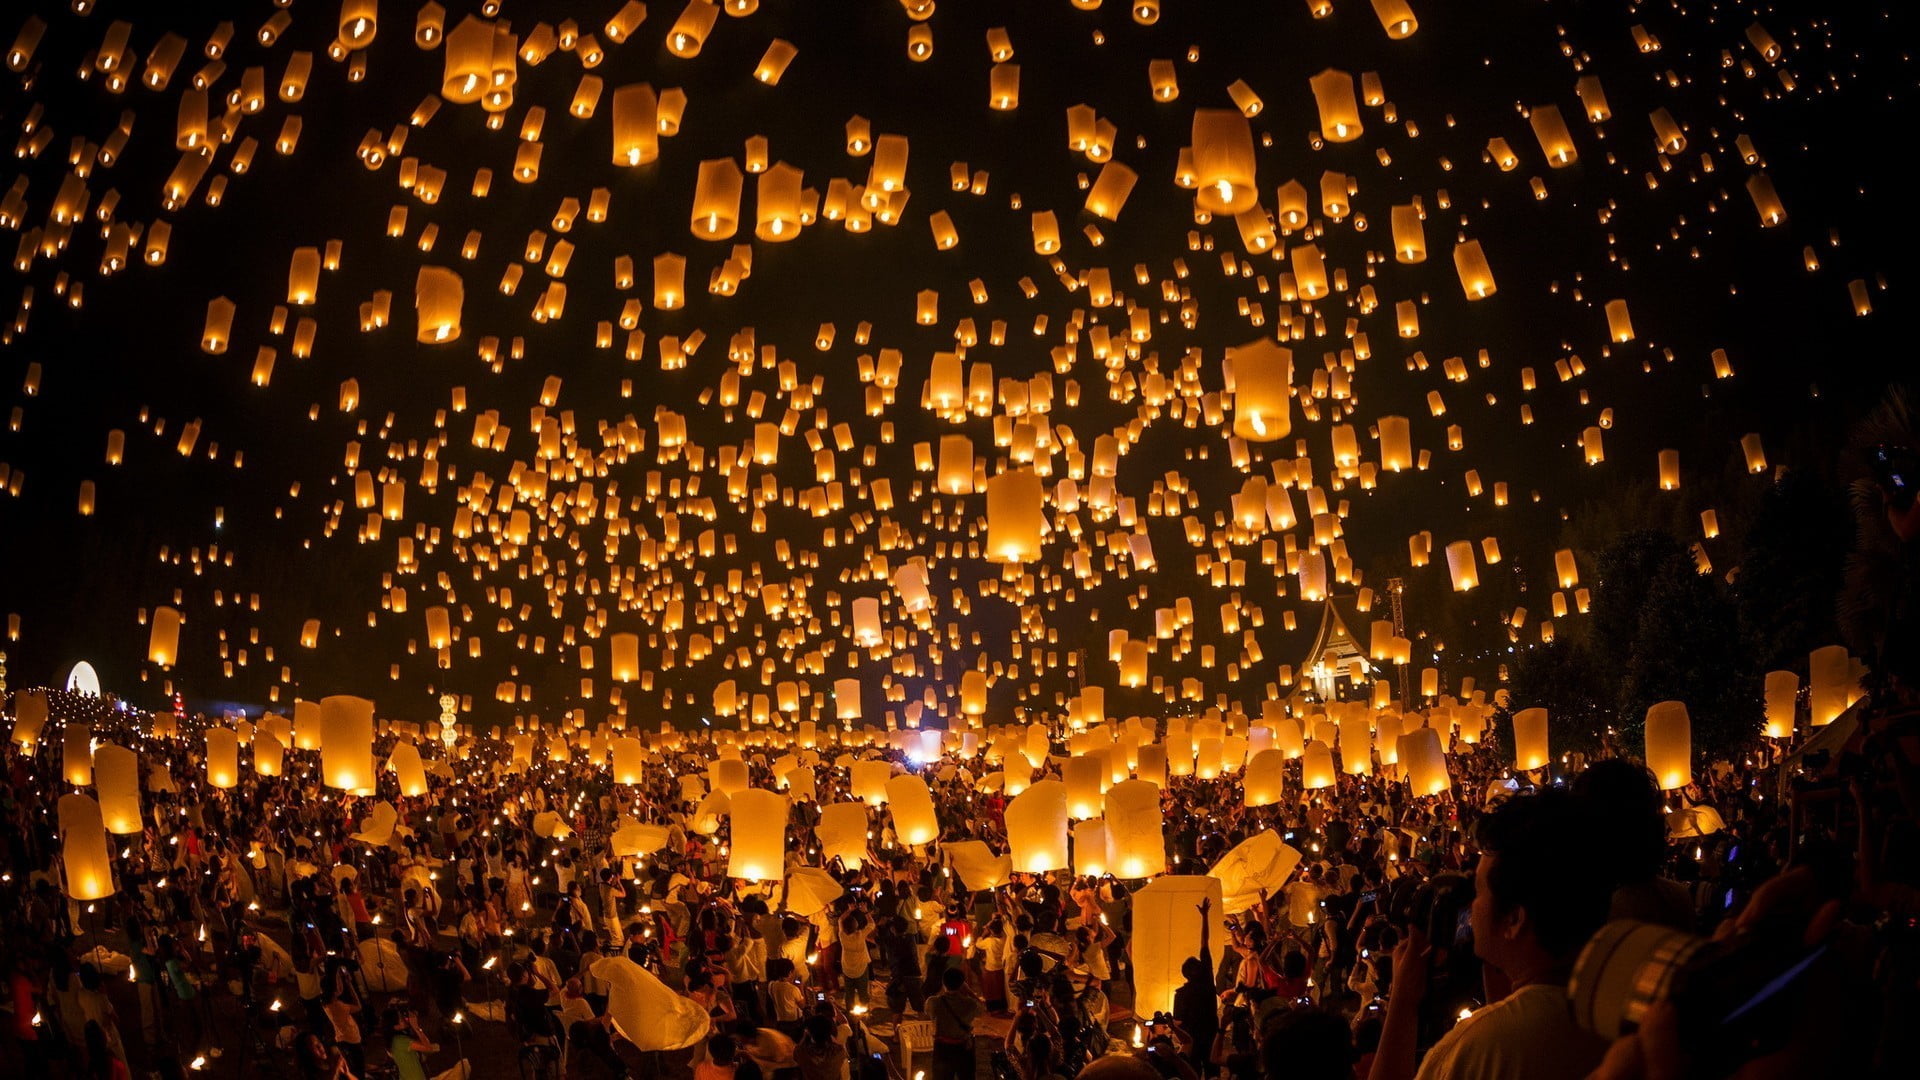 orange lanterns, lamp, people, festivals, crowd, large group of people